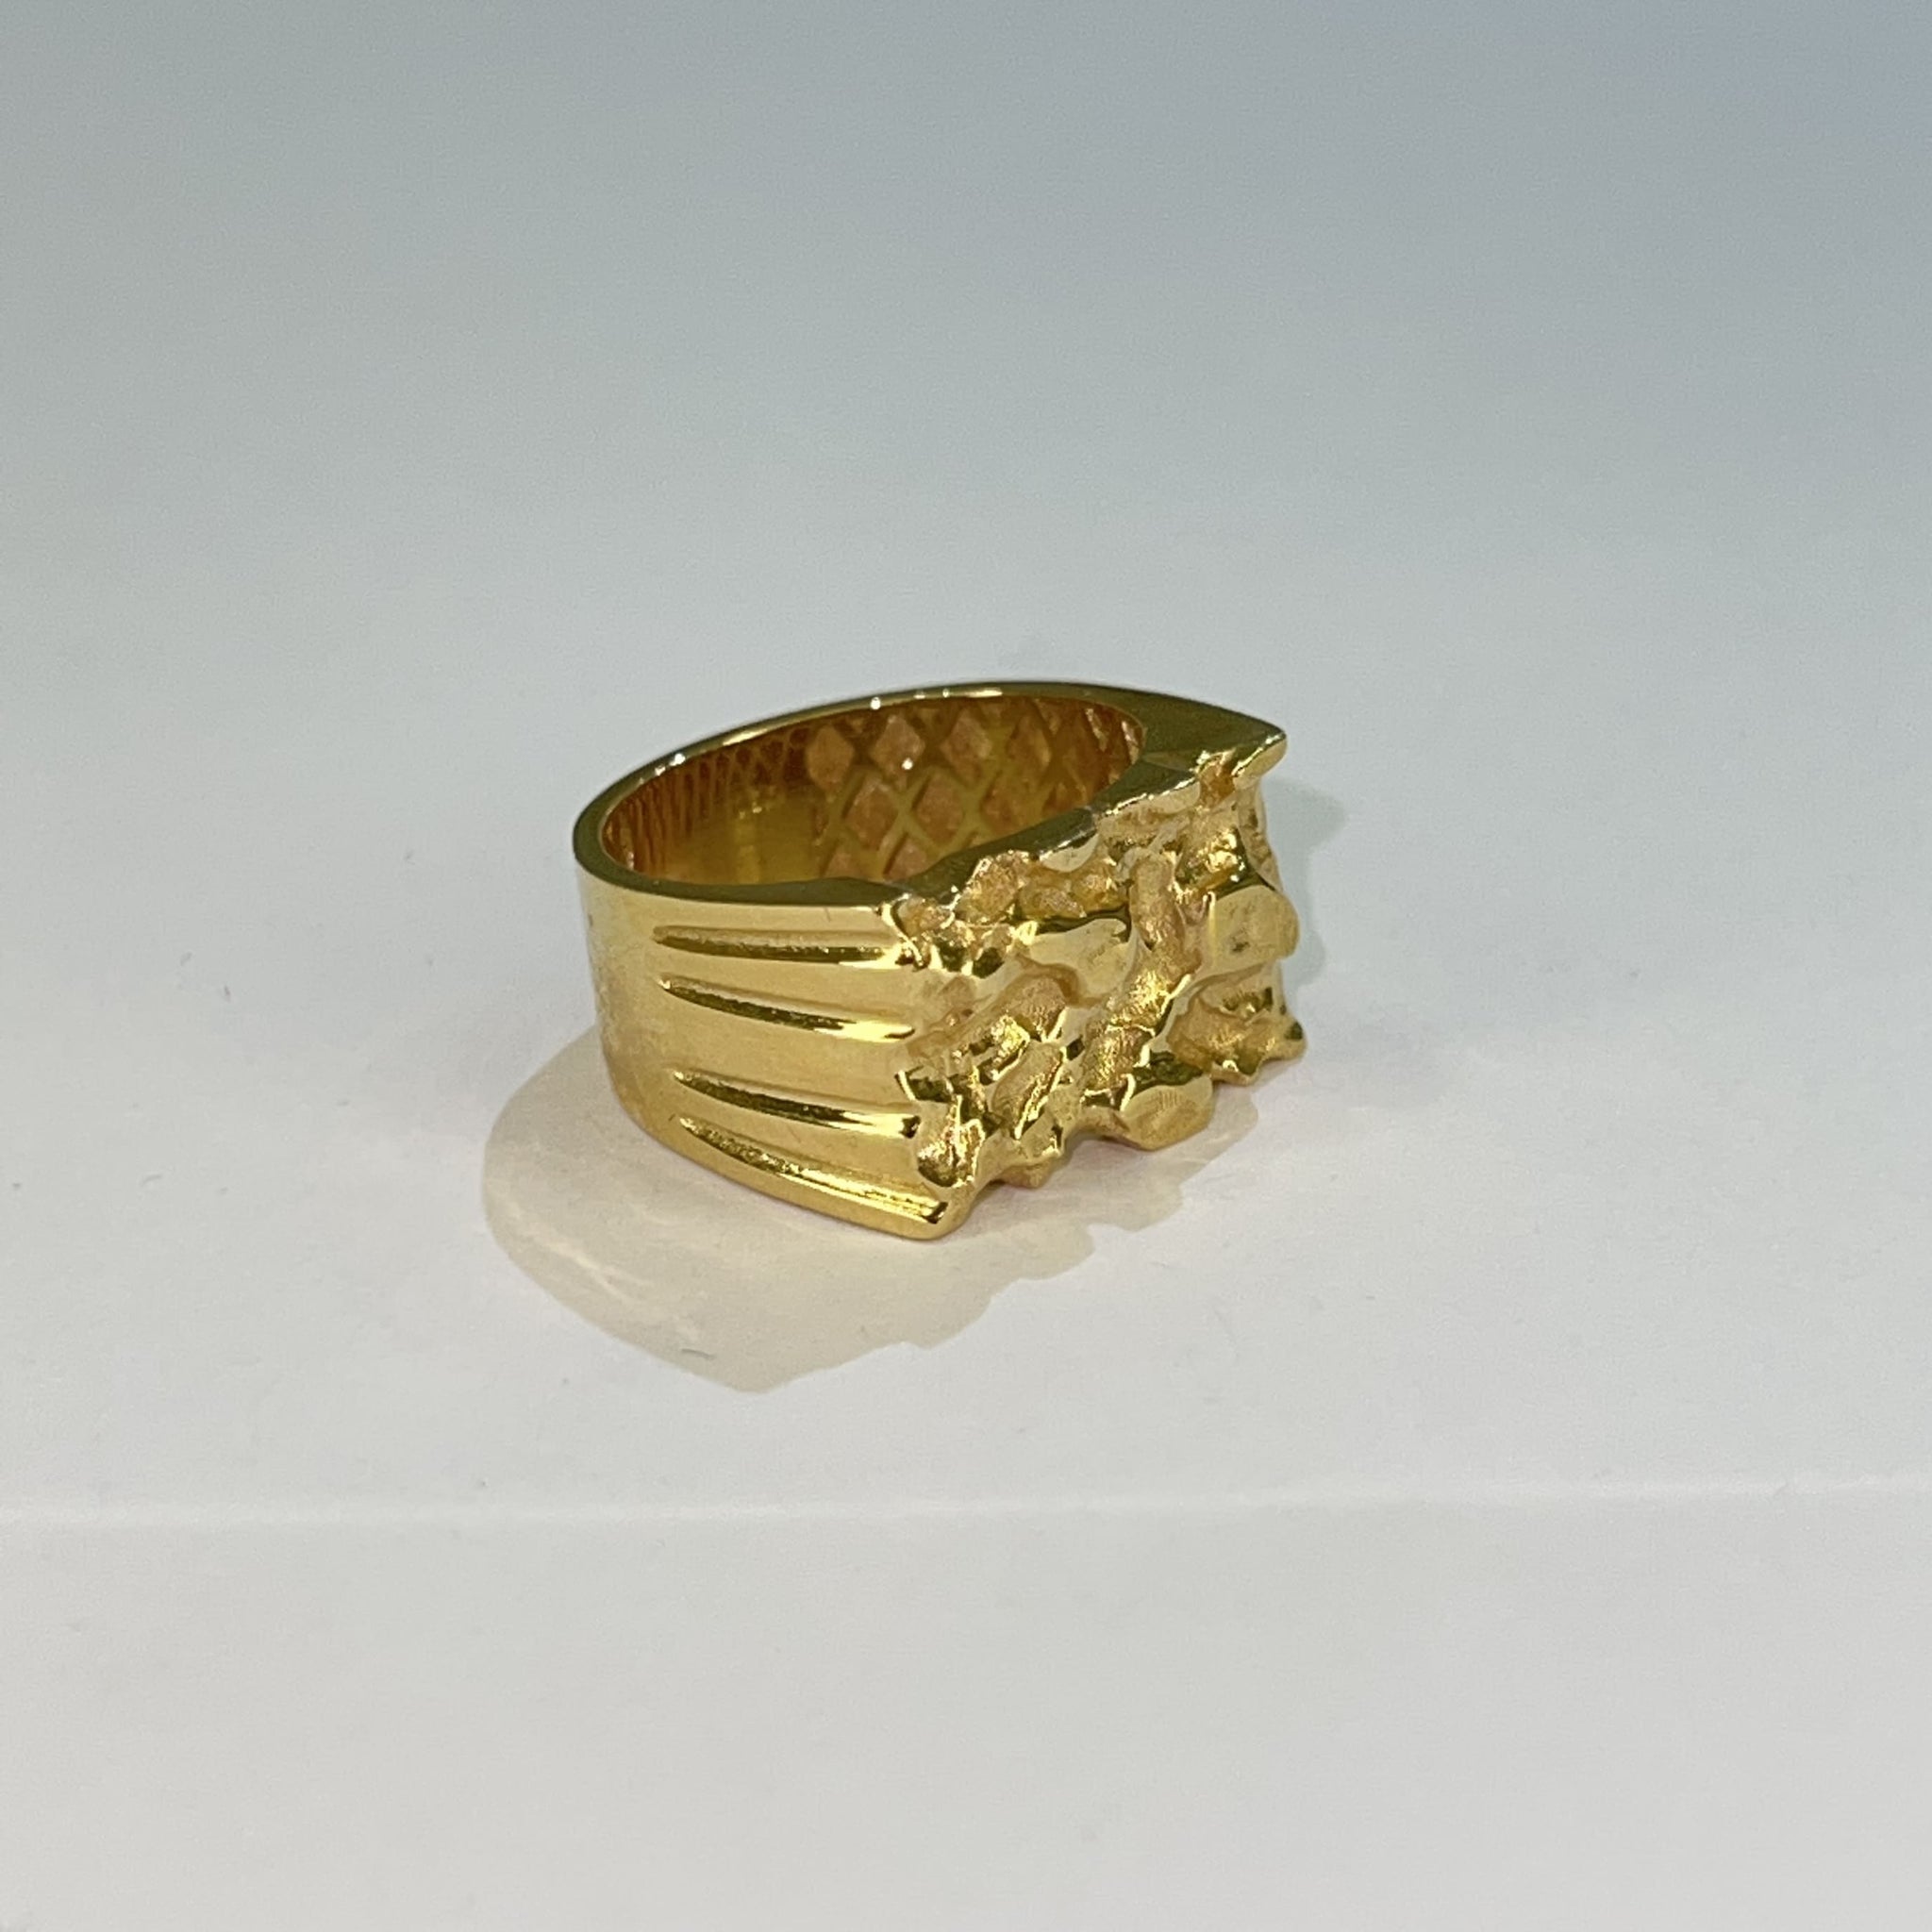 Piet Piet Ring - Hollow Model - 14 carat gold